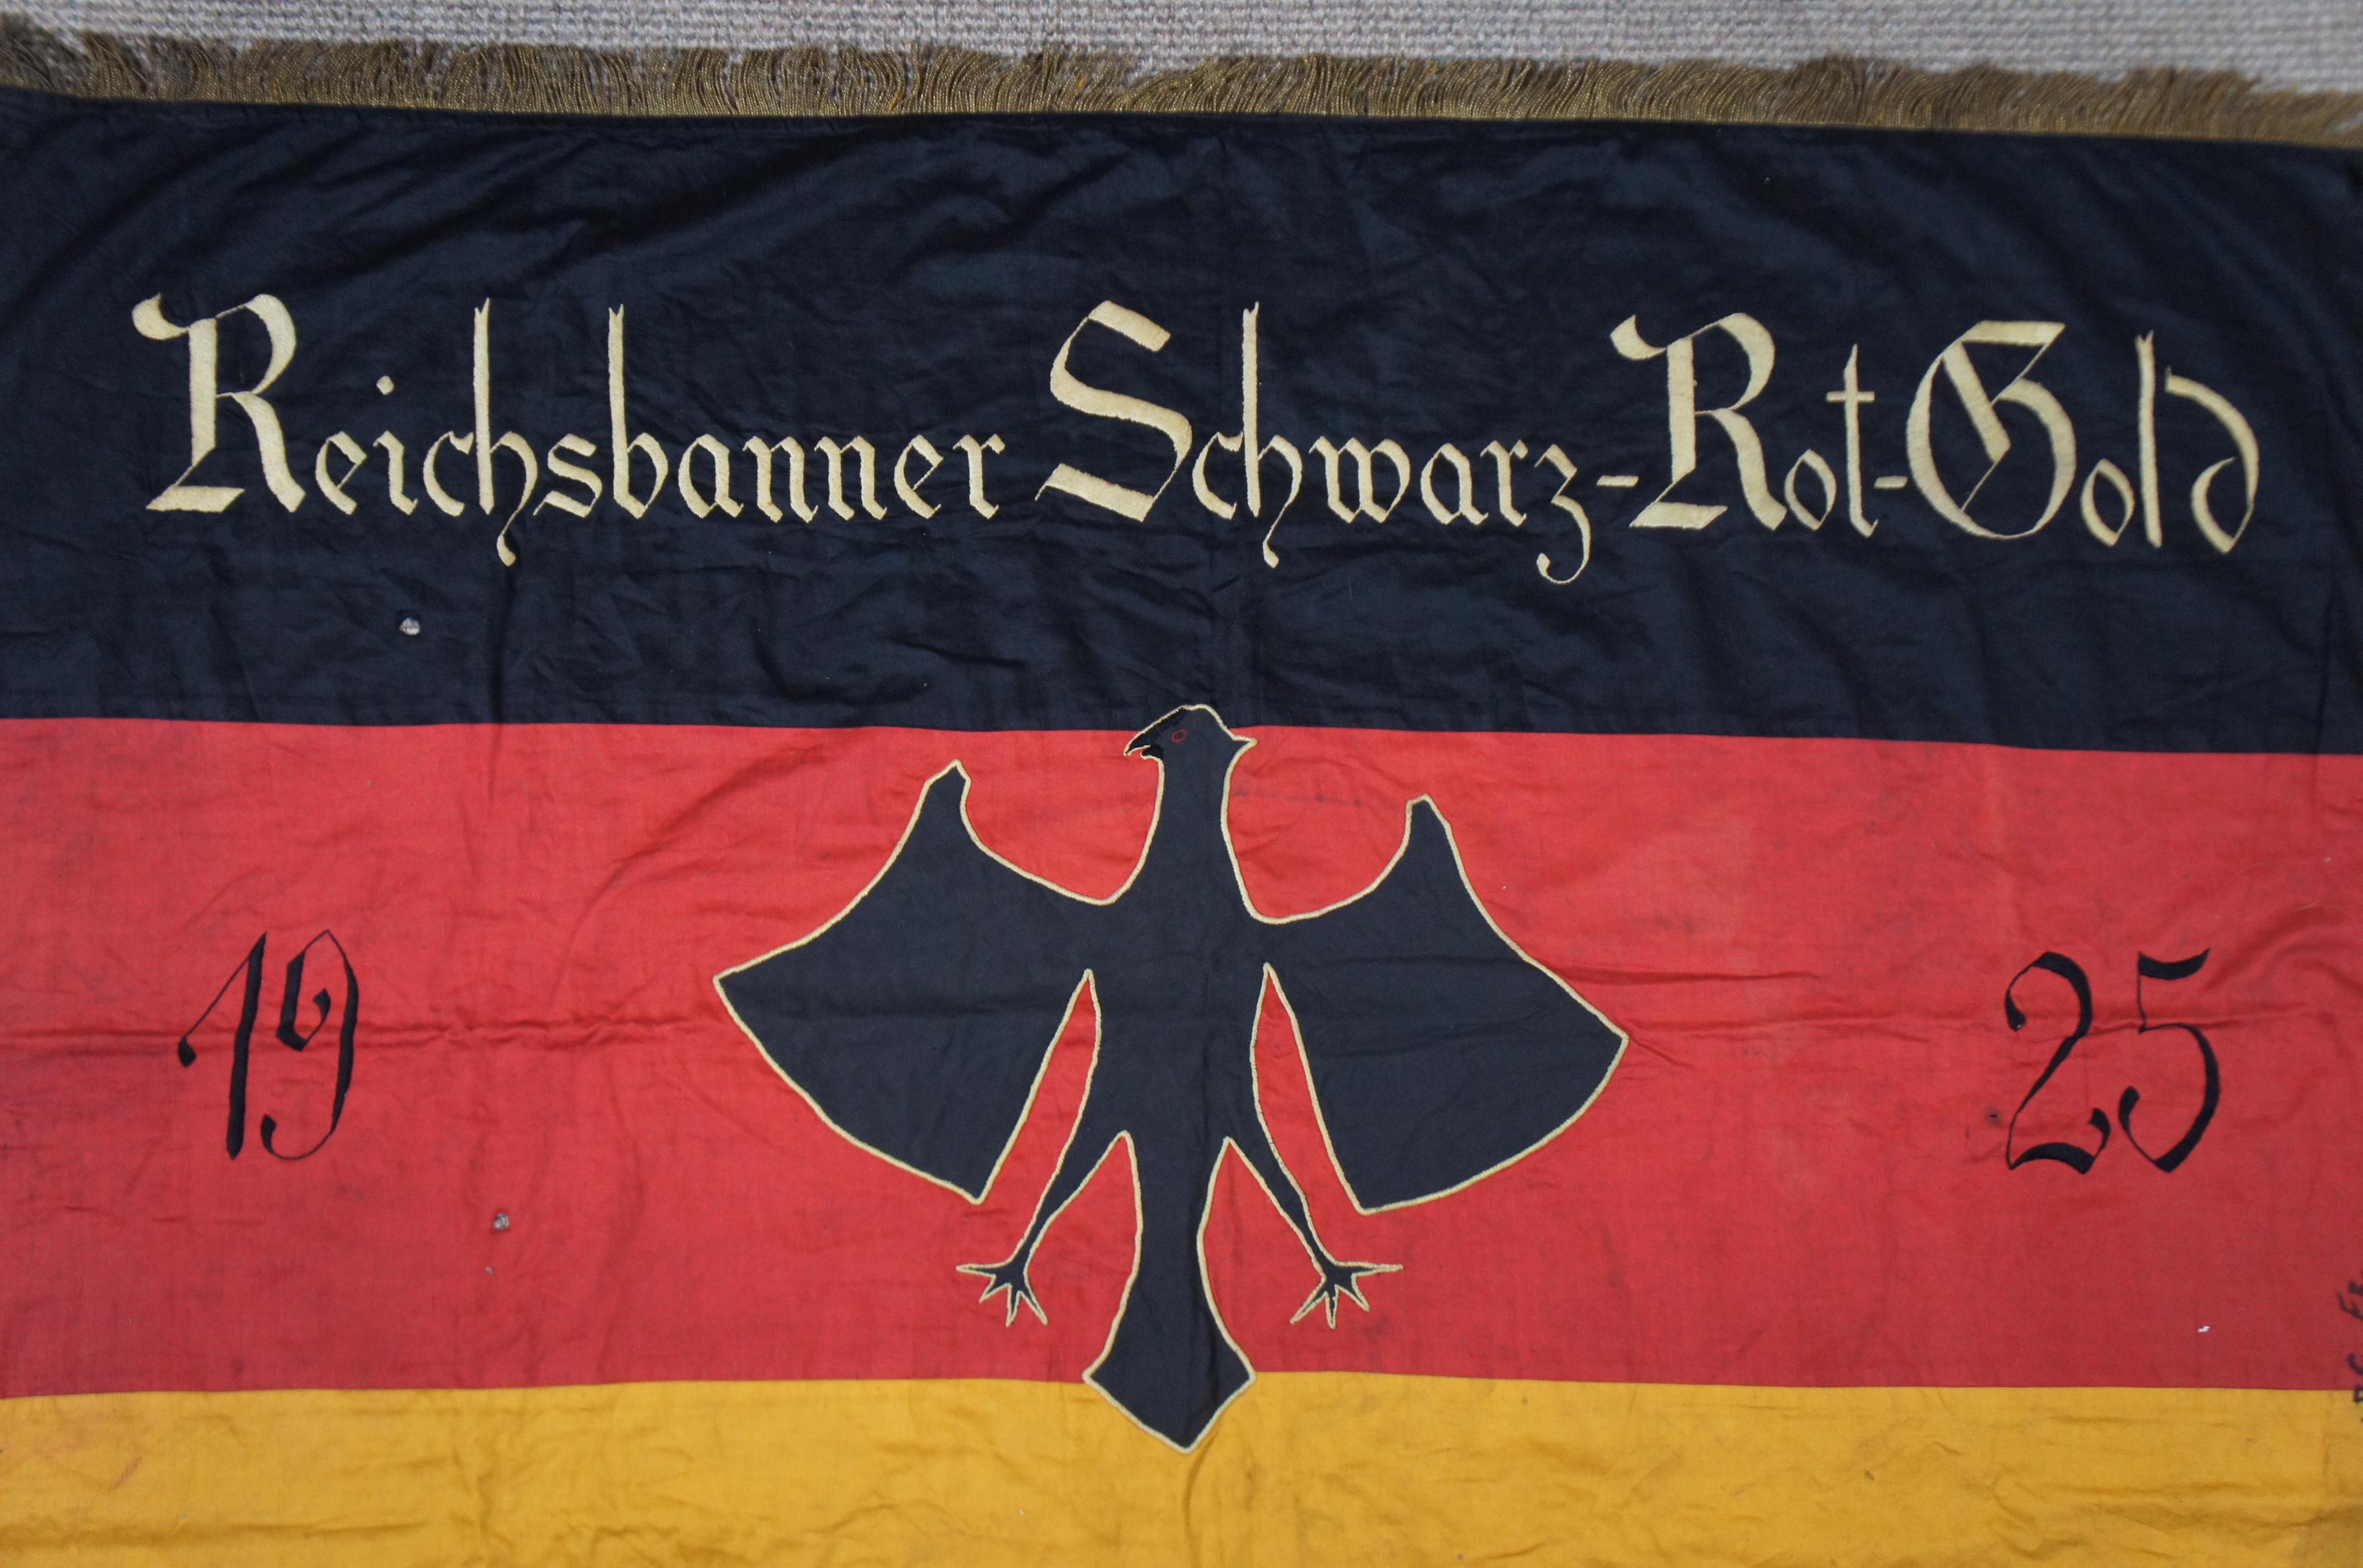 1925 Rare Antique German Reichsbanner Imperial Eagle Banner Flag 57